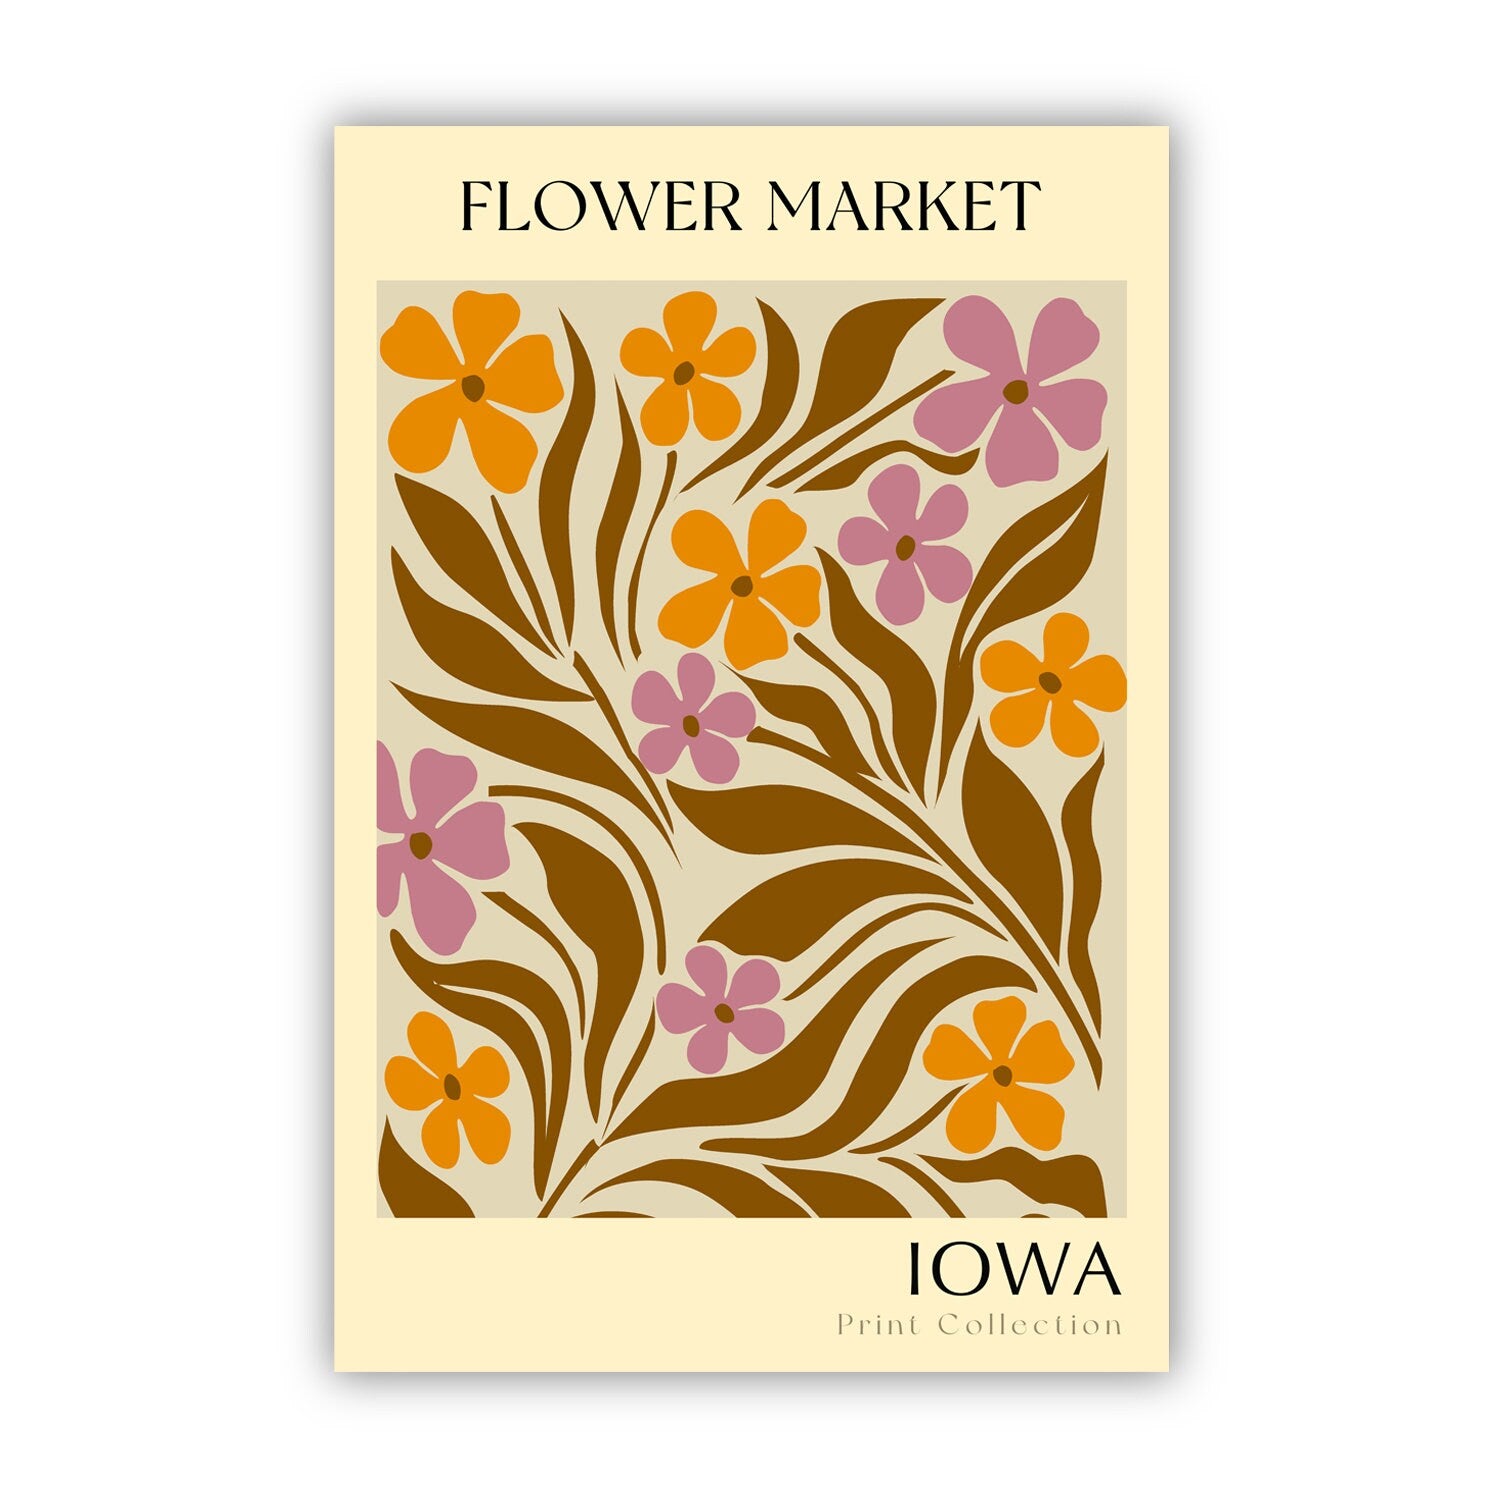 Iowa State flower print, USA states poster, Iowa flower market poster, Botanical posters, Nature poster artwork, Boho floral wall art